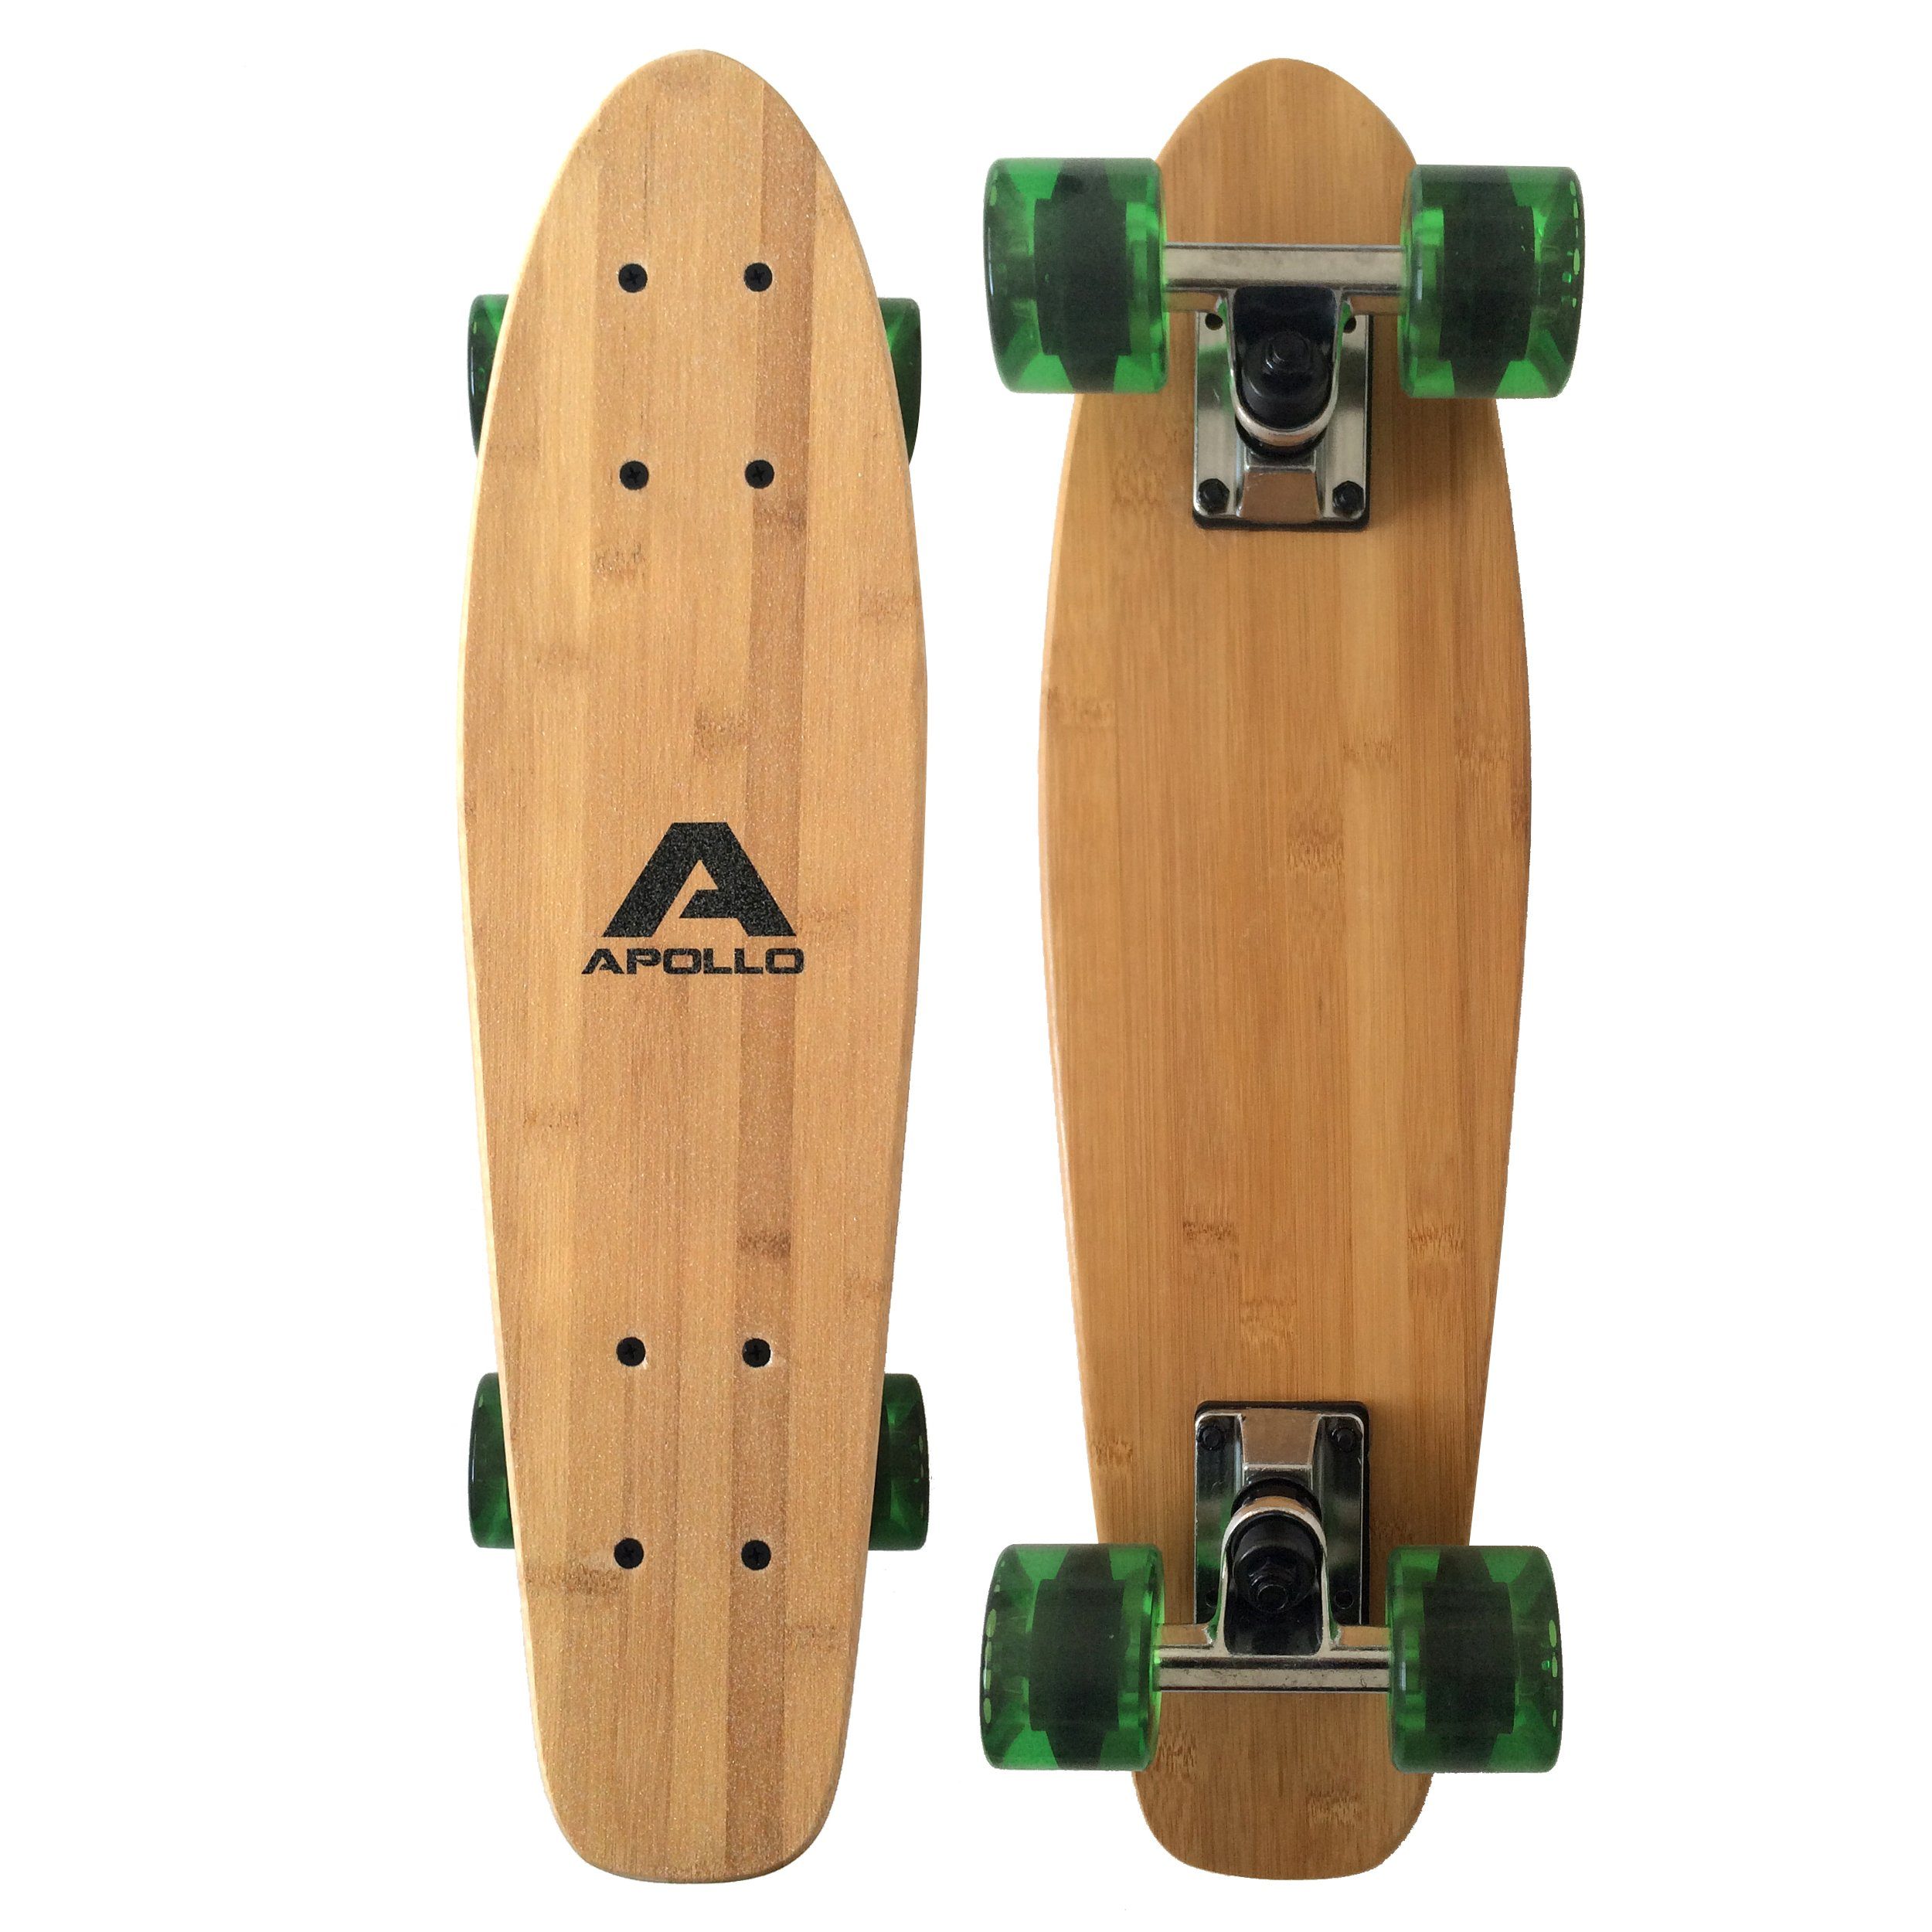 Apollo Miniskateboard Fancyboard Classic Blue 22", kompakt mit hochwertiger Verarbeitung Classic Green